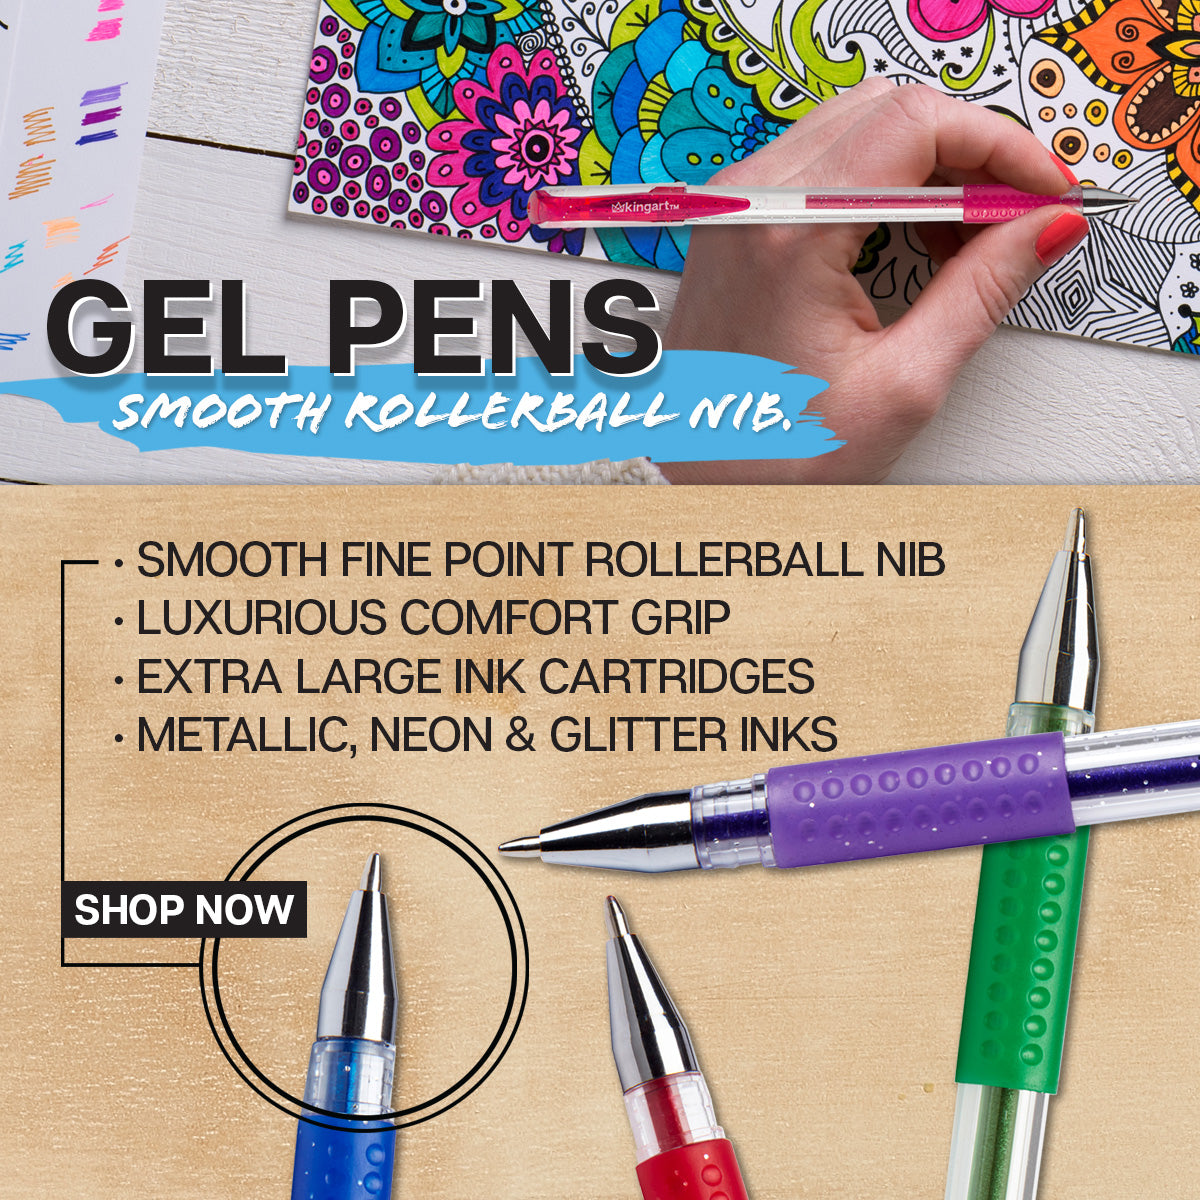 Artskills 50 Pack Gel Pens